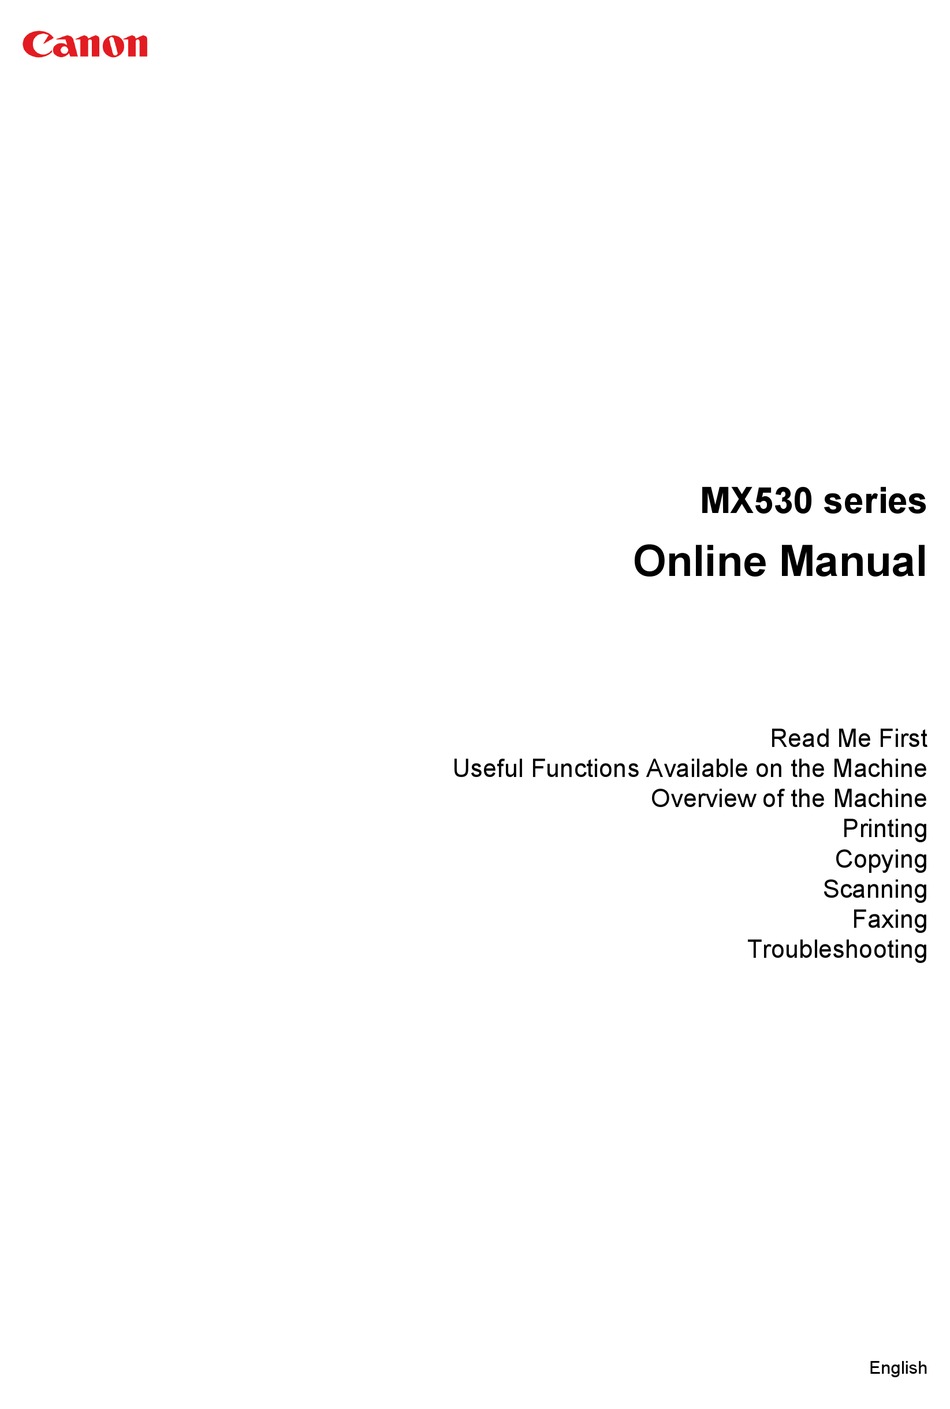 manual to add perfume CANON MX530 SERIES ONLINE MANUAL Pdf Download | ManualsLib